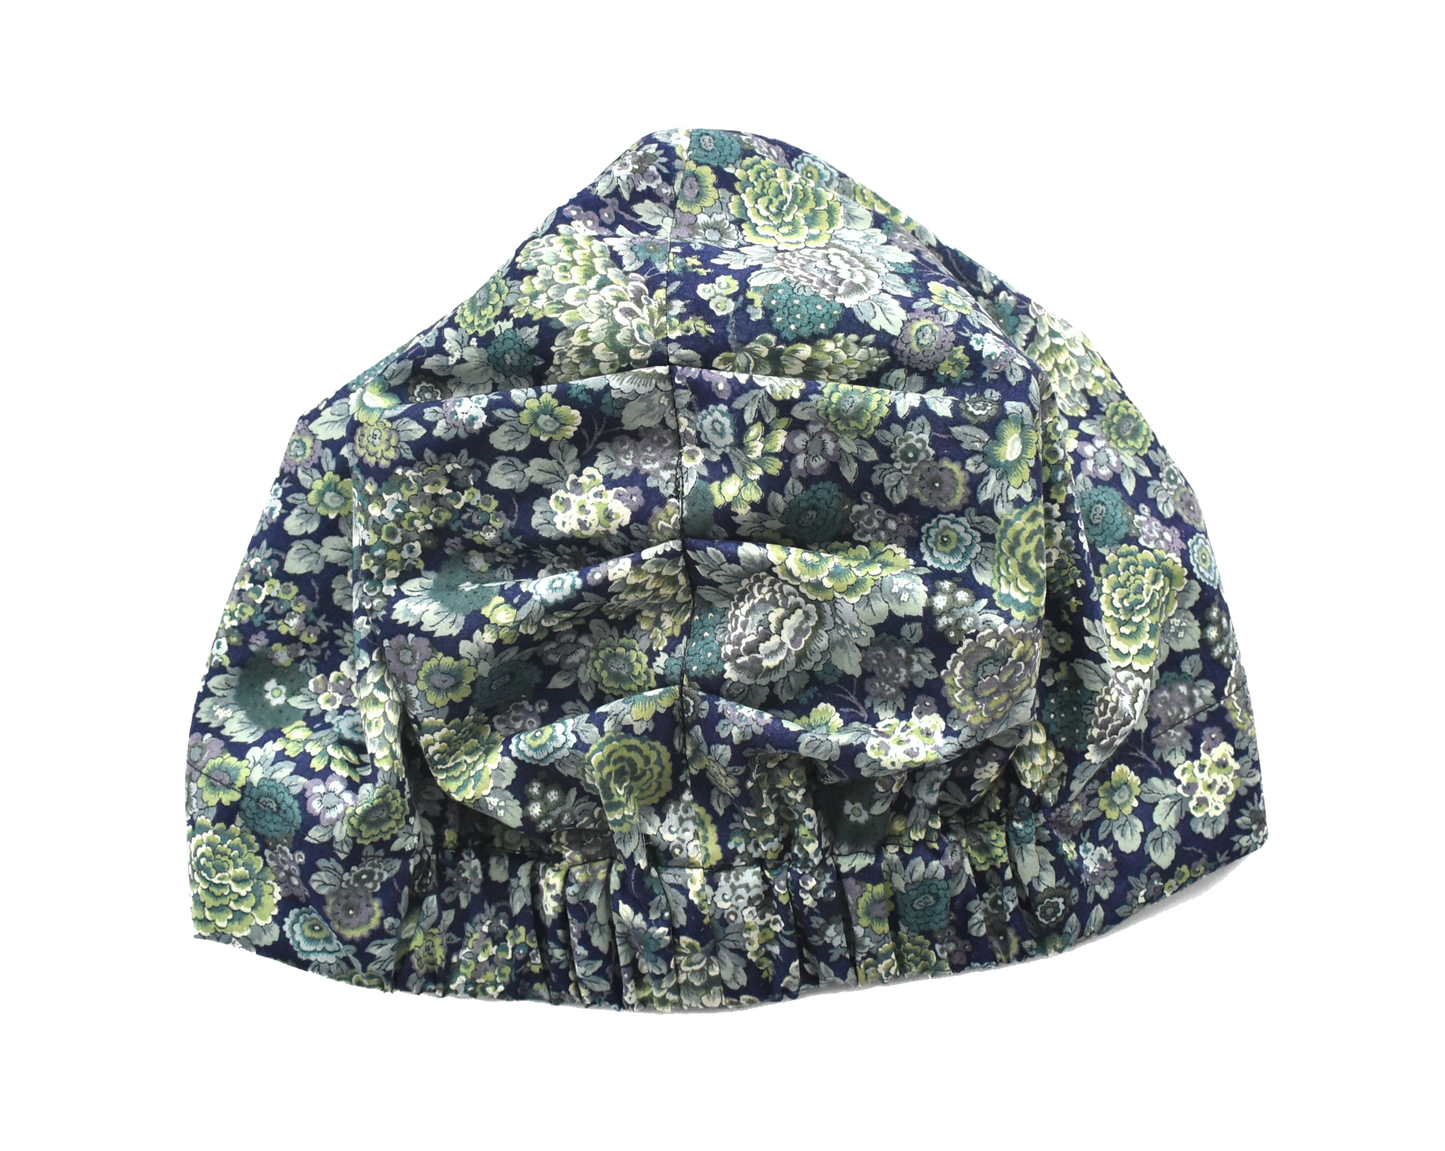 Ladies Turban Hat - Vintage Liberty of London Elysian Blue Floral print